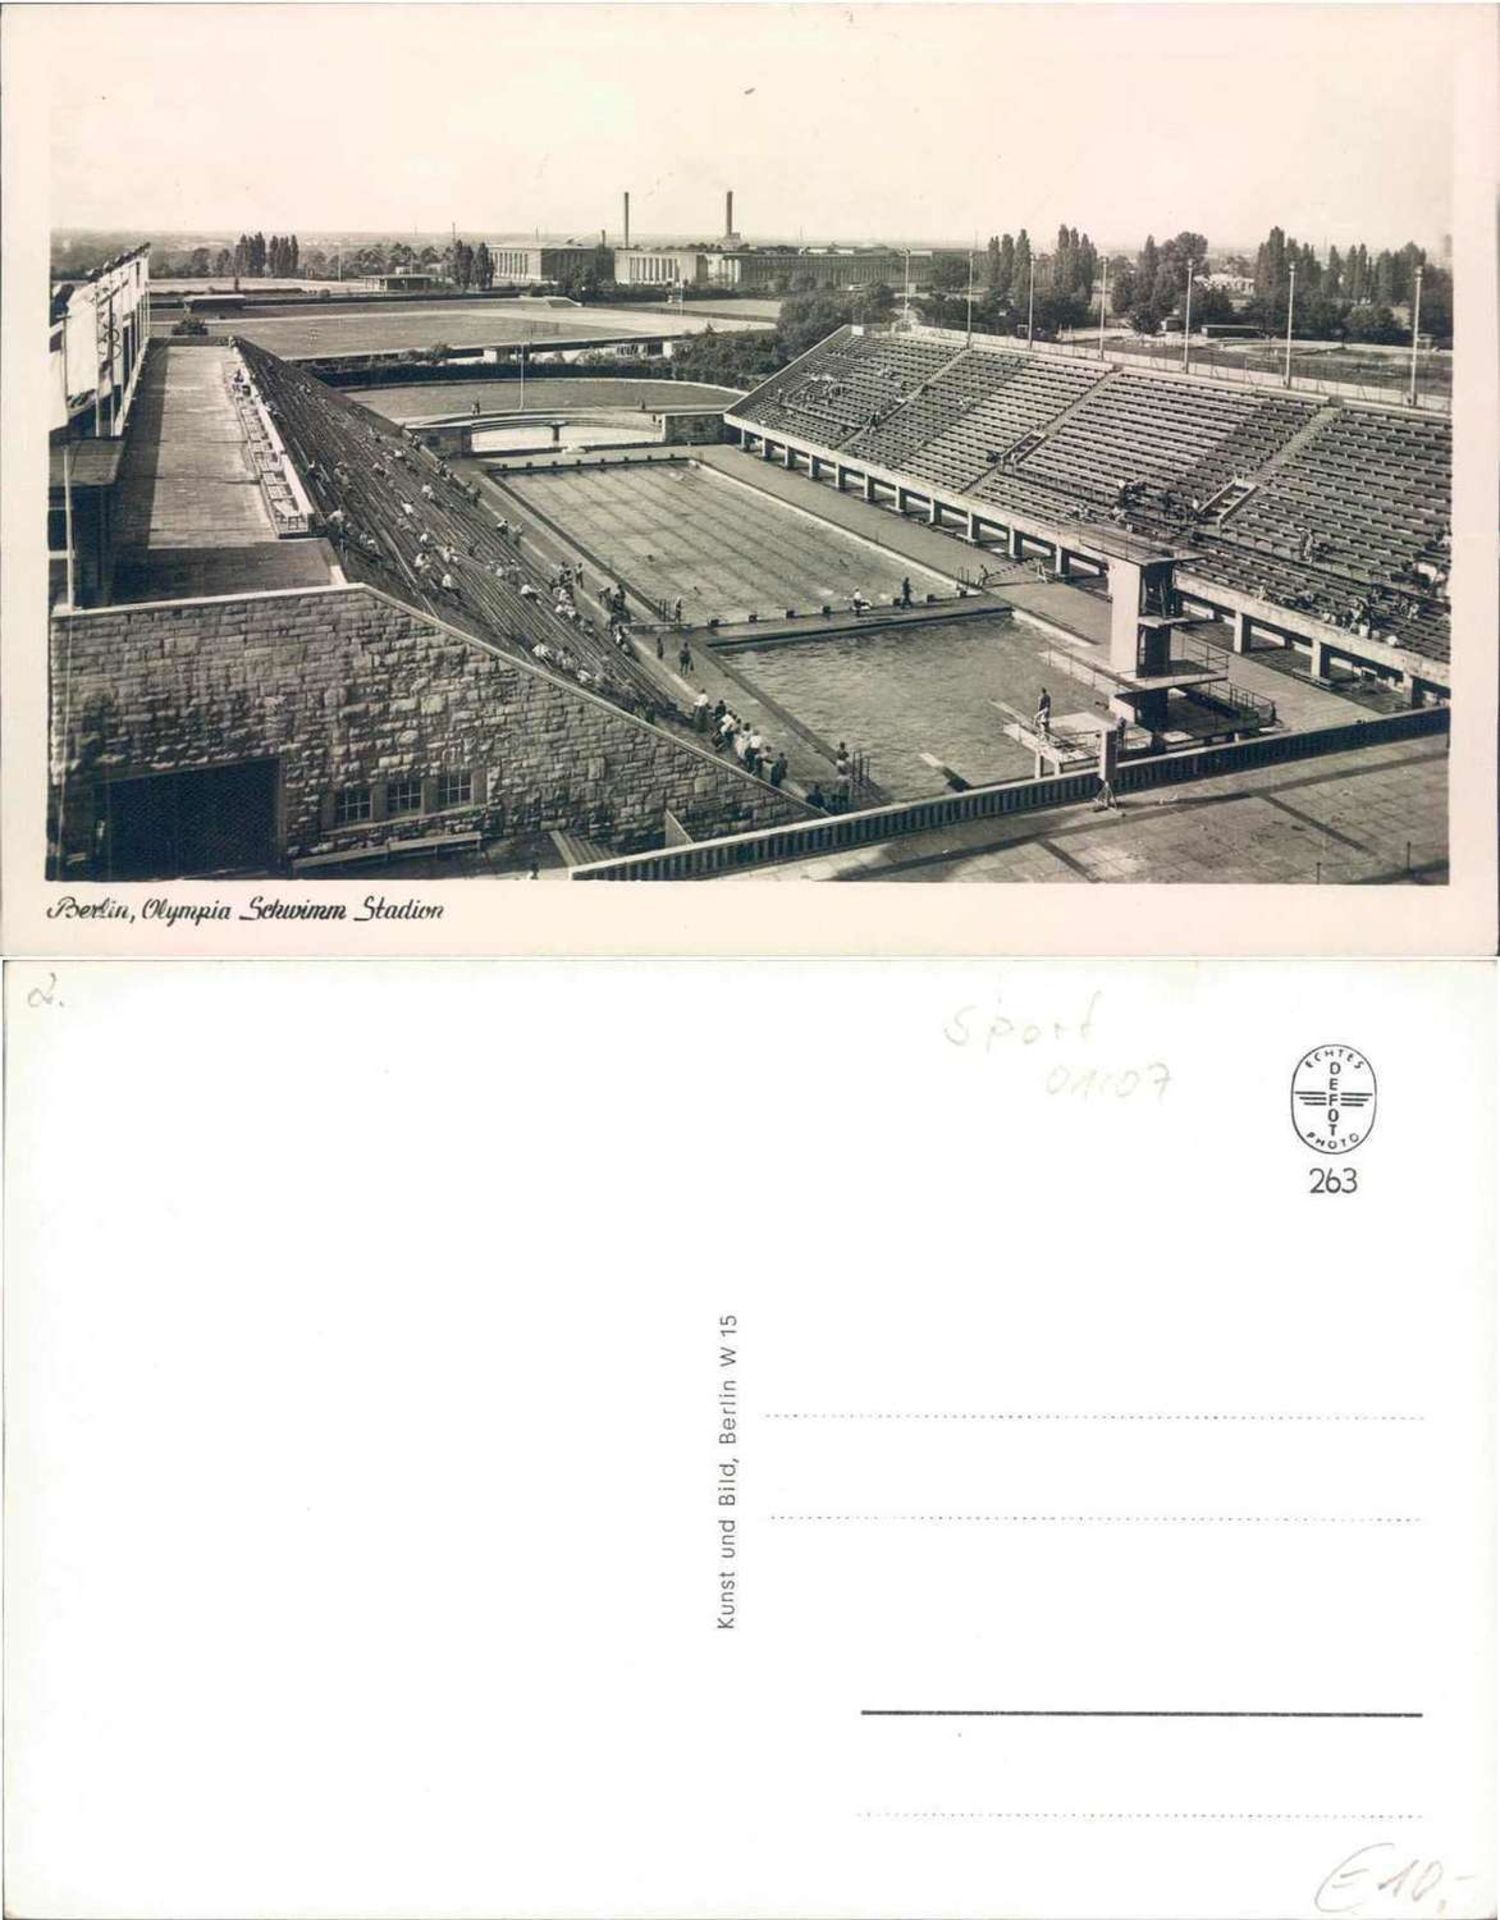 Postkarte Berlin Olympia Schwimm - Stadion.